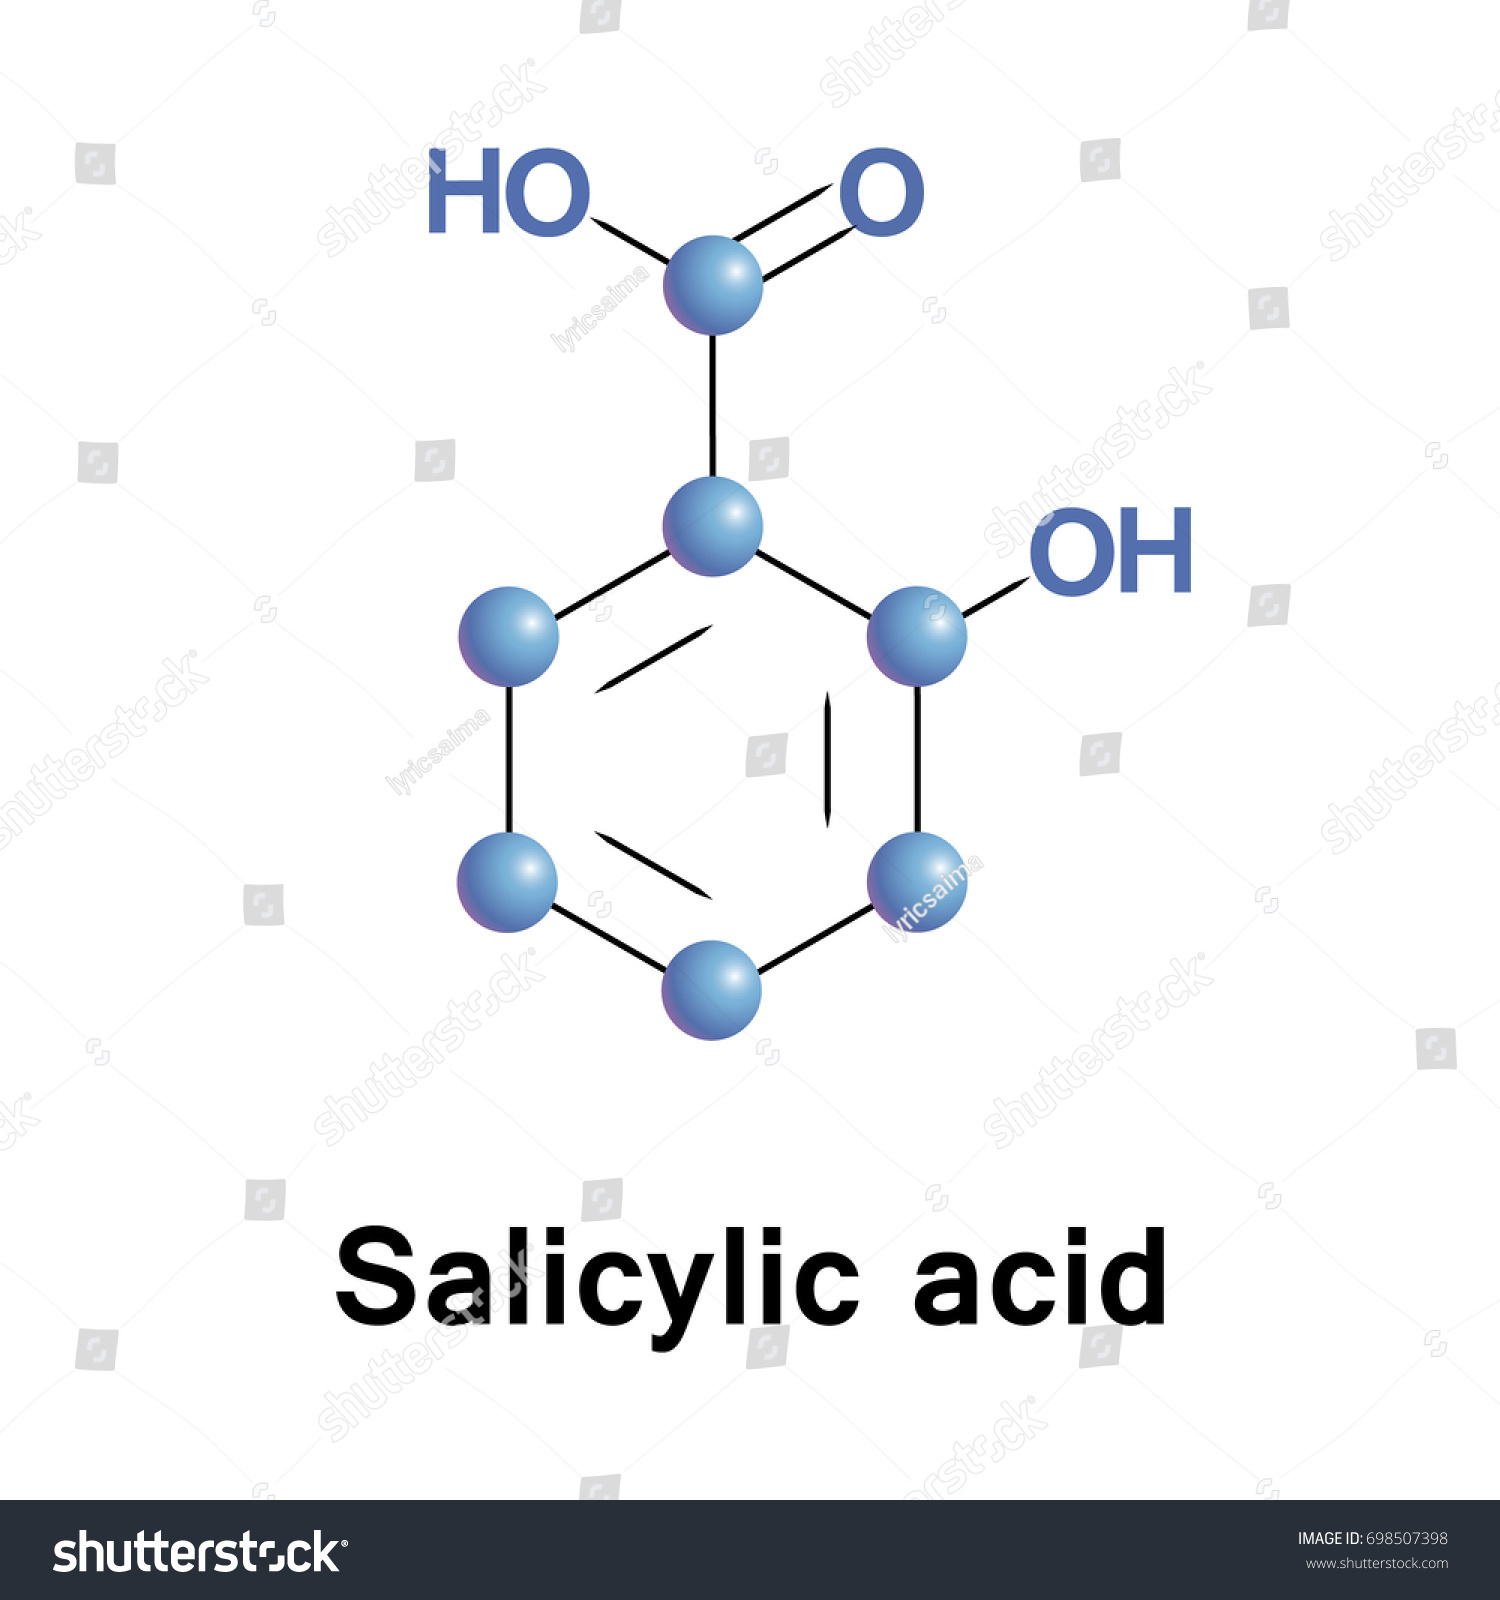 Salicylic acid is a lipophilic monohydroxybenzoic acid, a type of phenolic acid, and a beta hydroxy acid.  #698507398